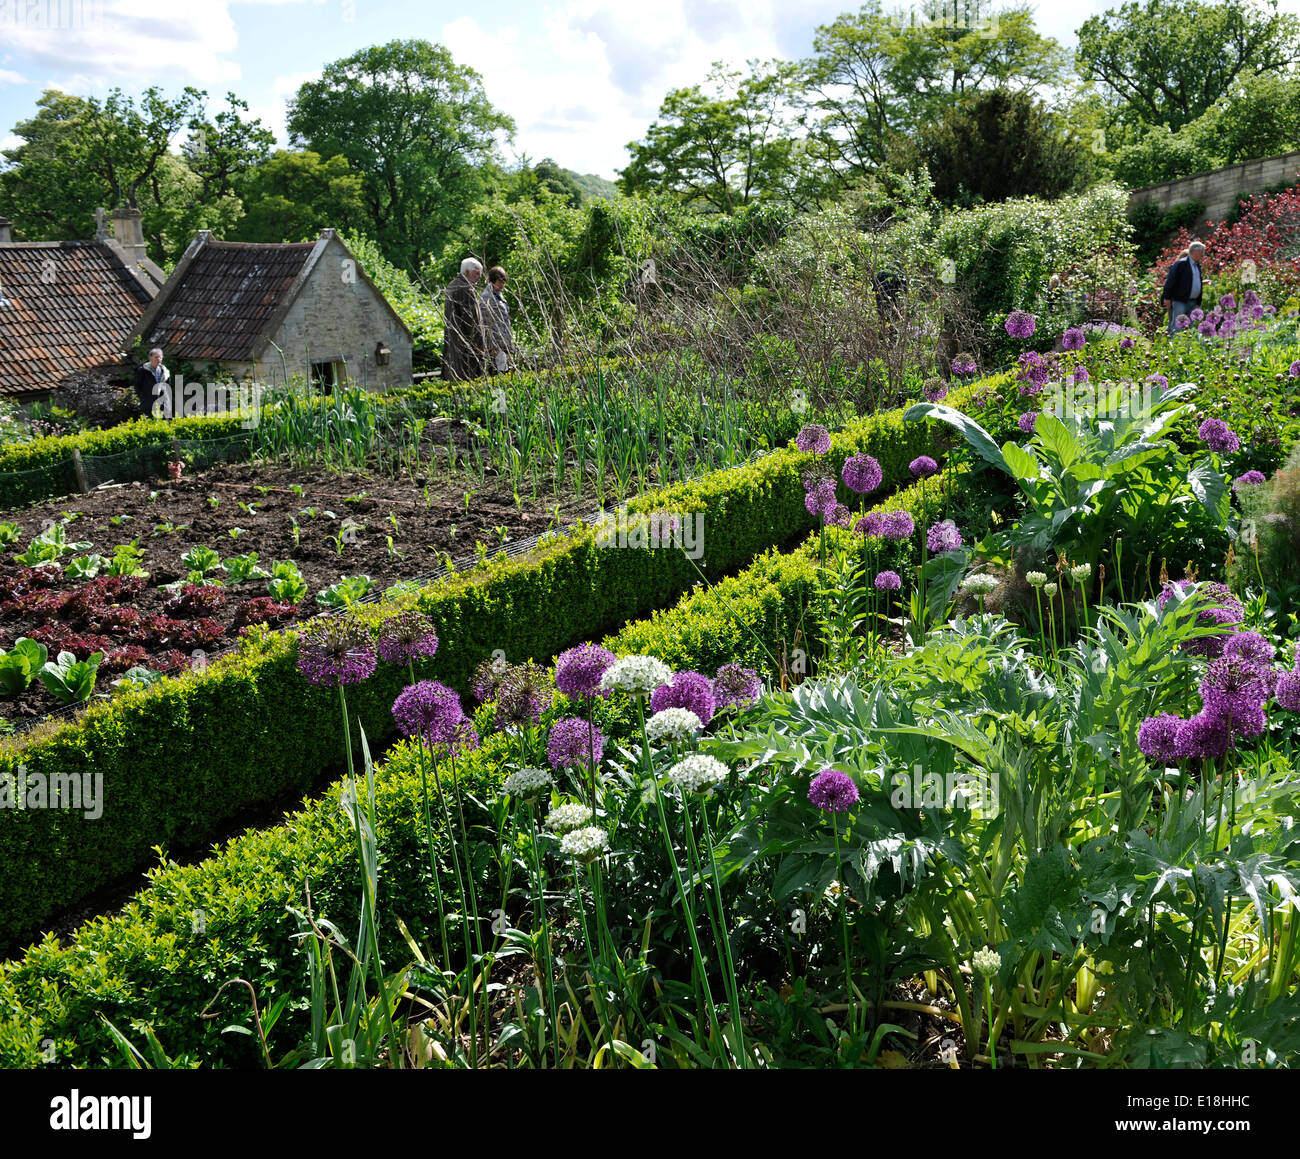 Vegetable garden plots in the landscaped English Gardens of Belcombe Court, Bradford-on-Avon, Wiltshire, UK Stock Photo